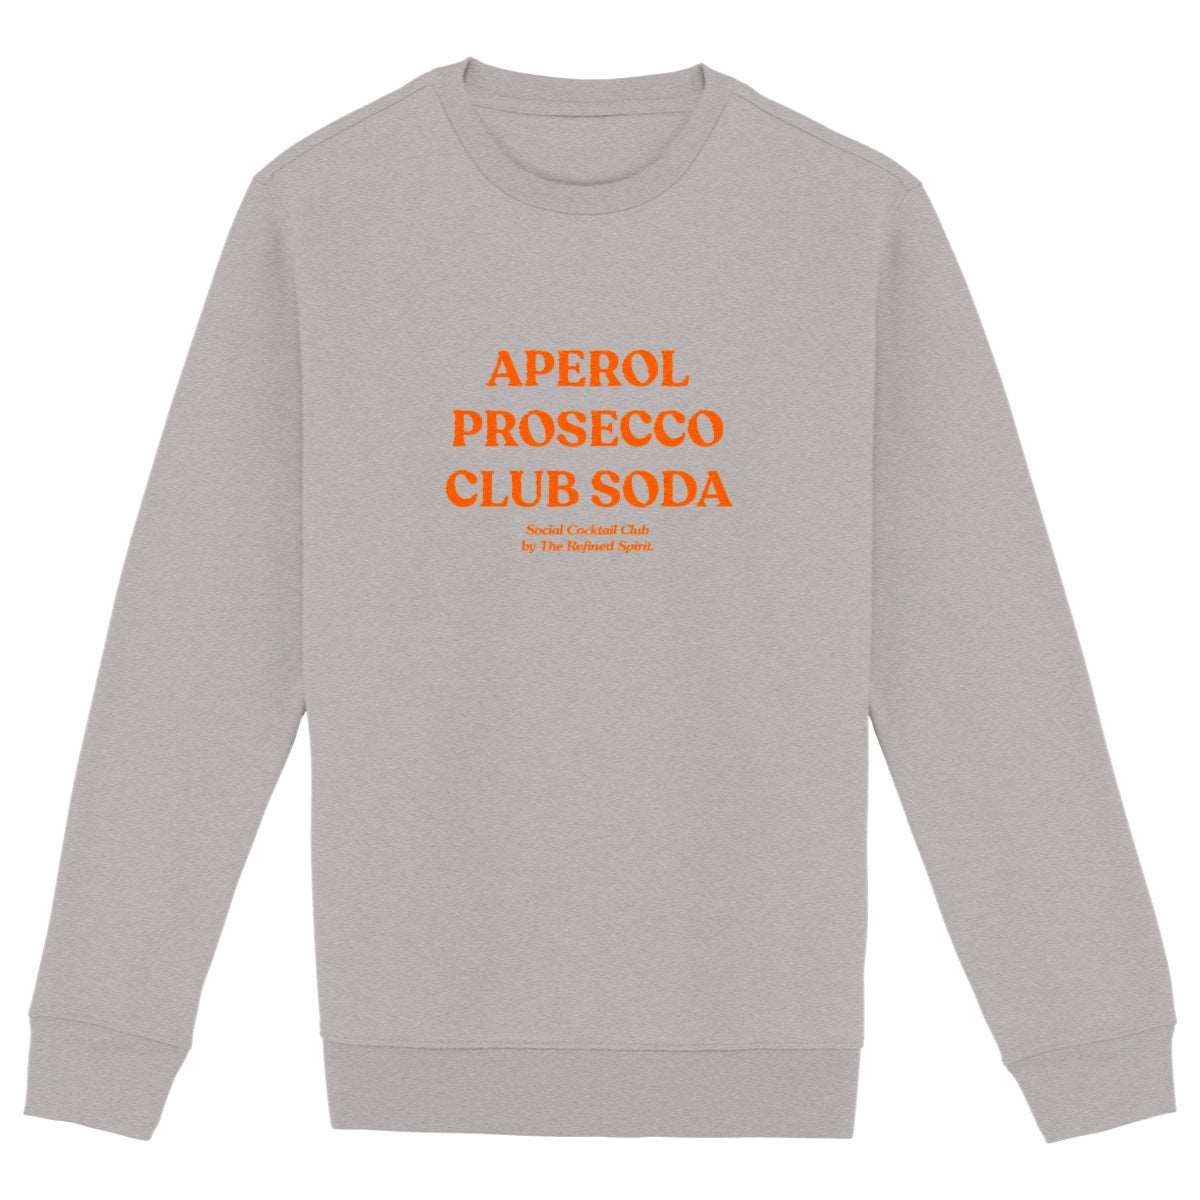 Aperol Prosecco Club Soda - Organic Sweatshirt